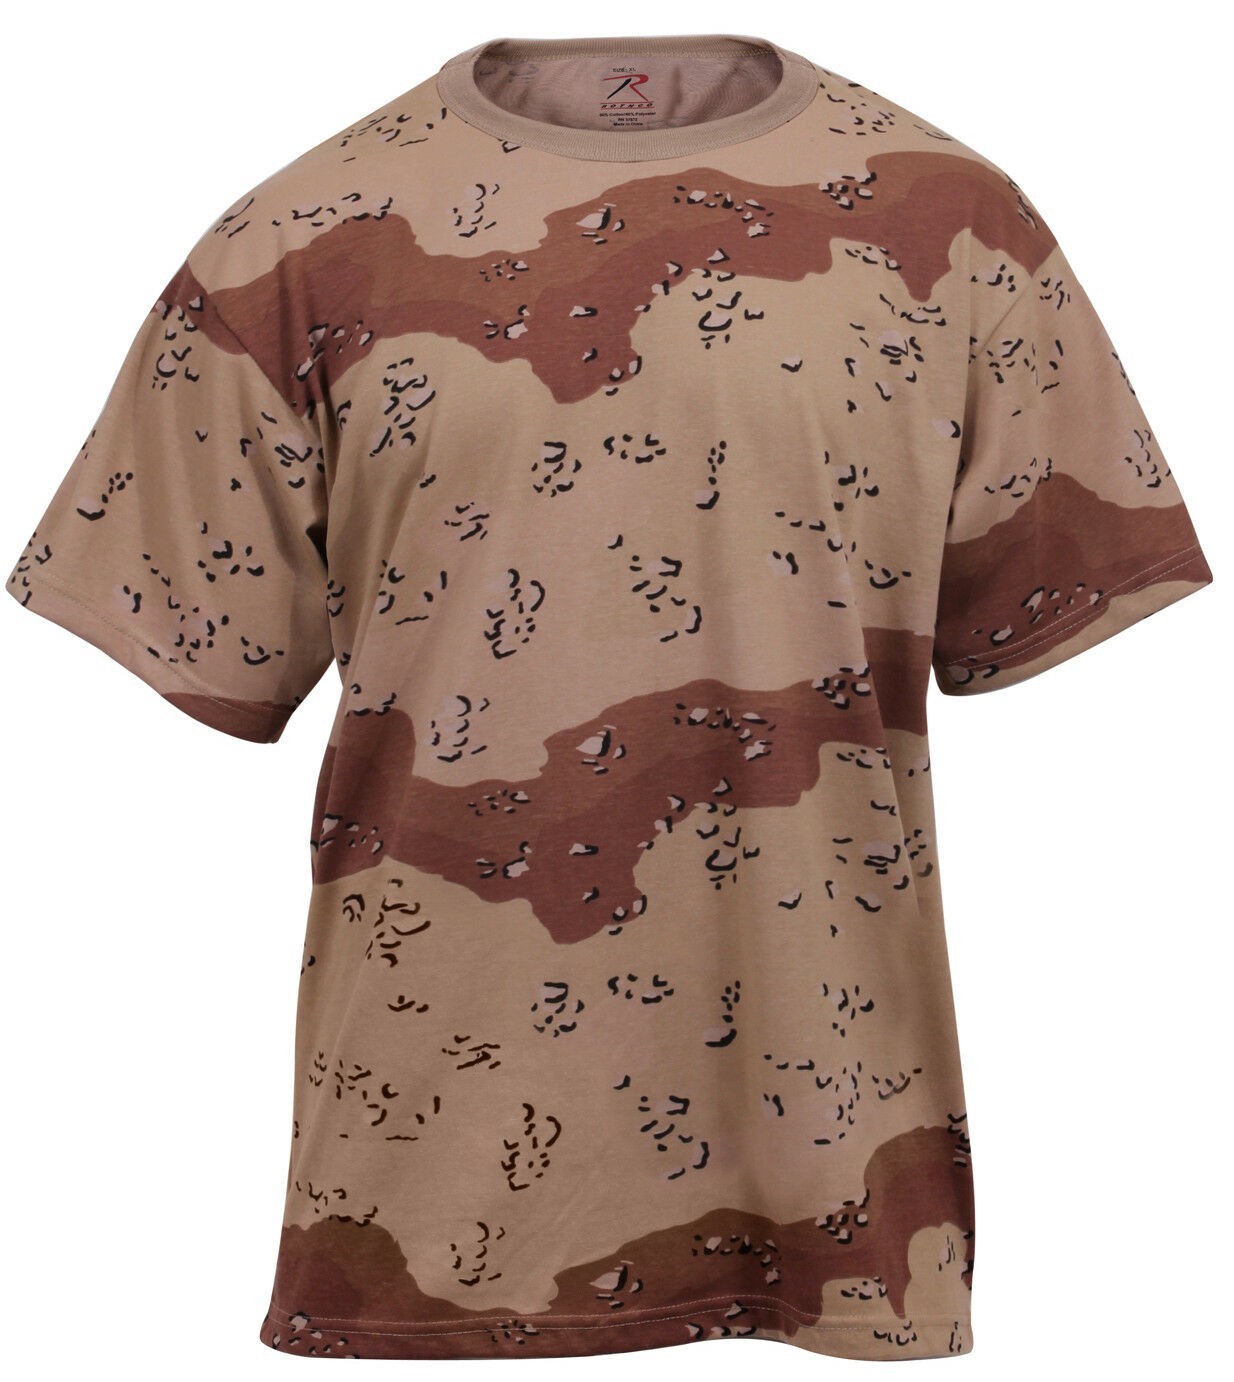 Rothco Color Camo T-Shirts - 6 Color Desert Camo